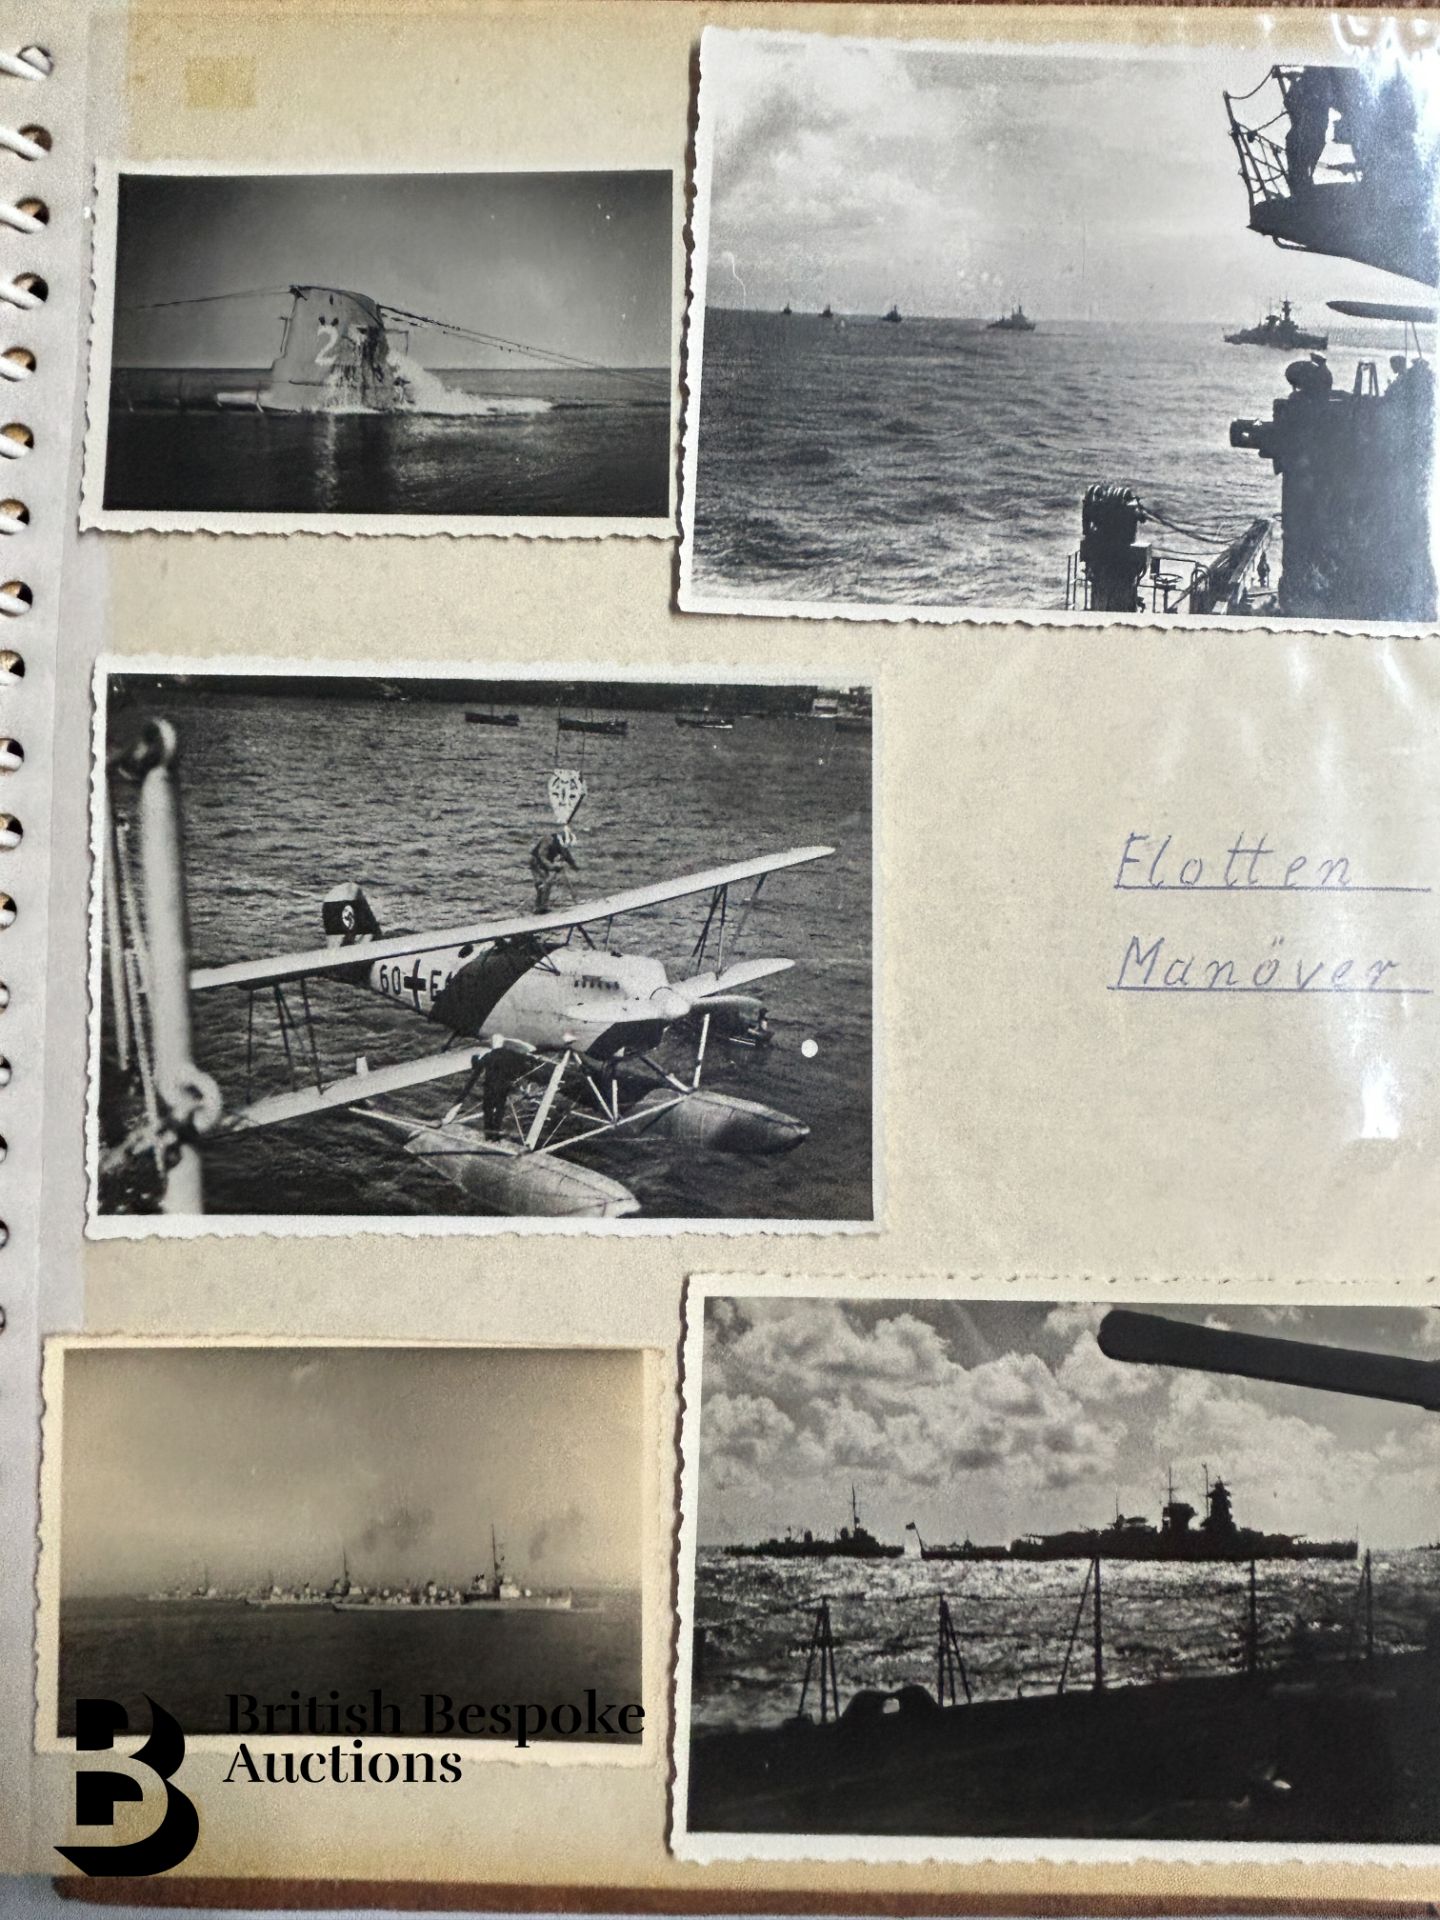 Graf Spee (Pocket Battleship) Interest, incl. Photographs, Documents, Miscellanea - Image 80 of 126